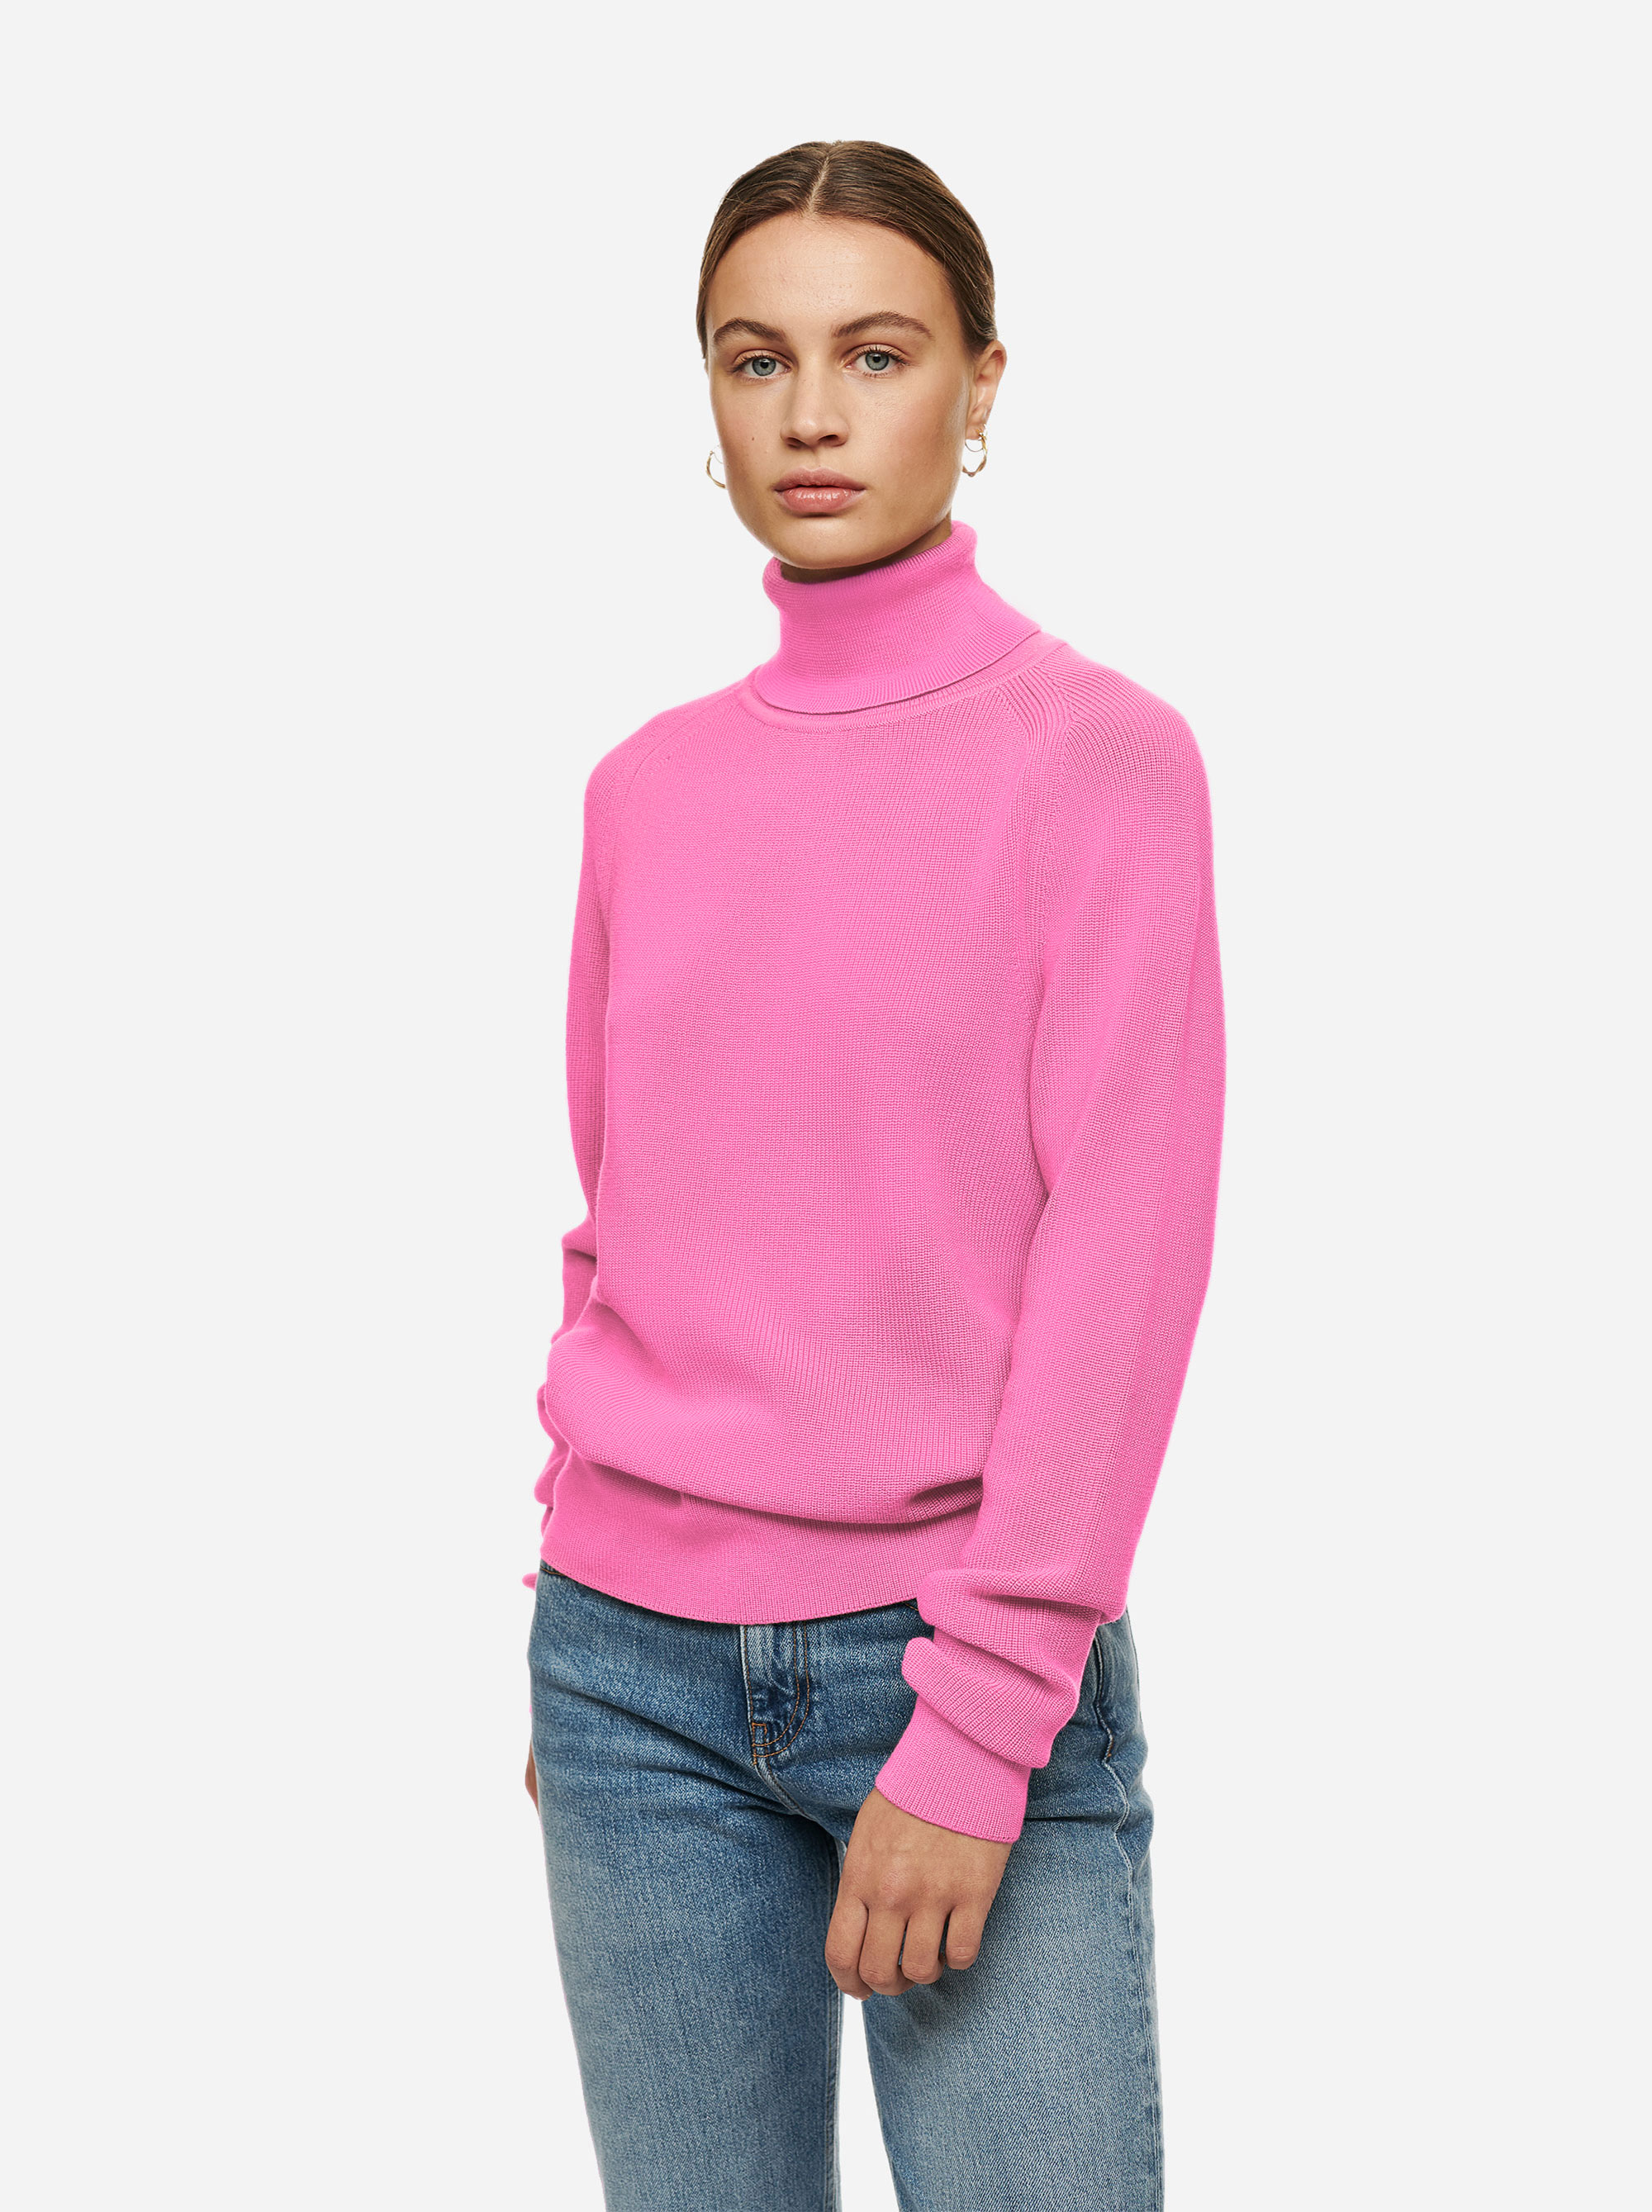 Teym - Turtleneck - The Merino Sweater - Women - Bright Pink - 1